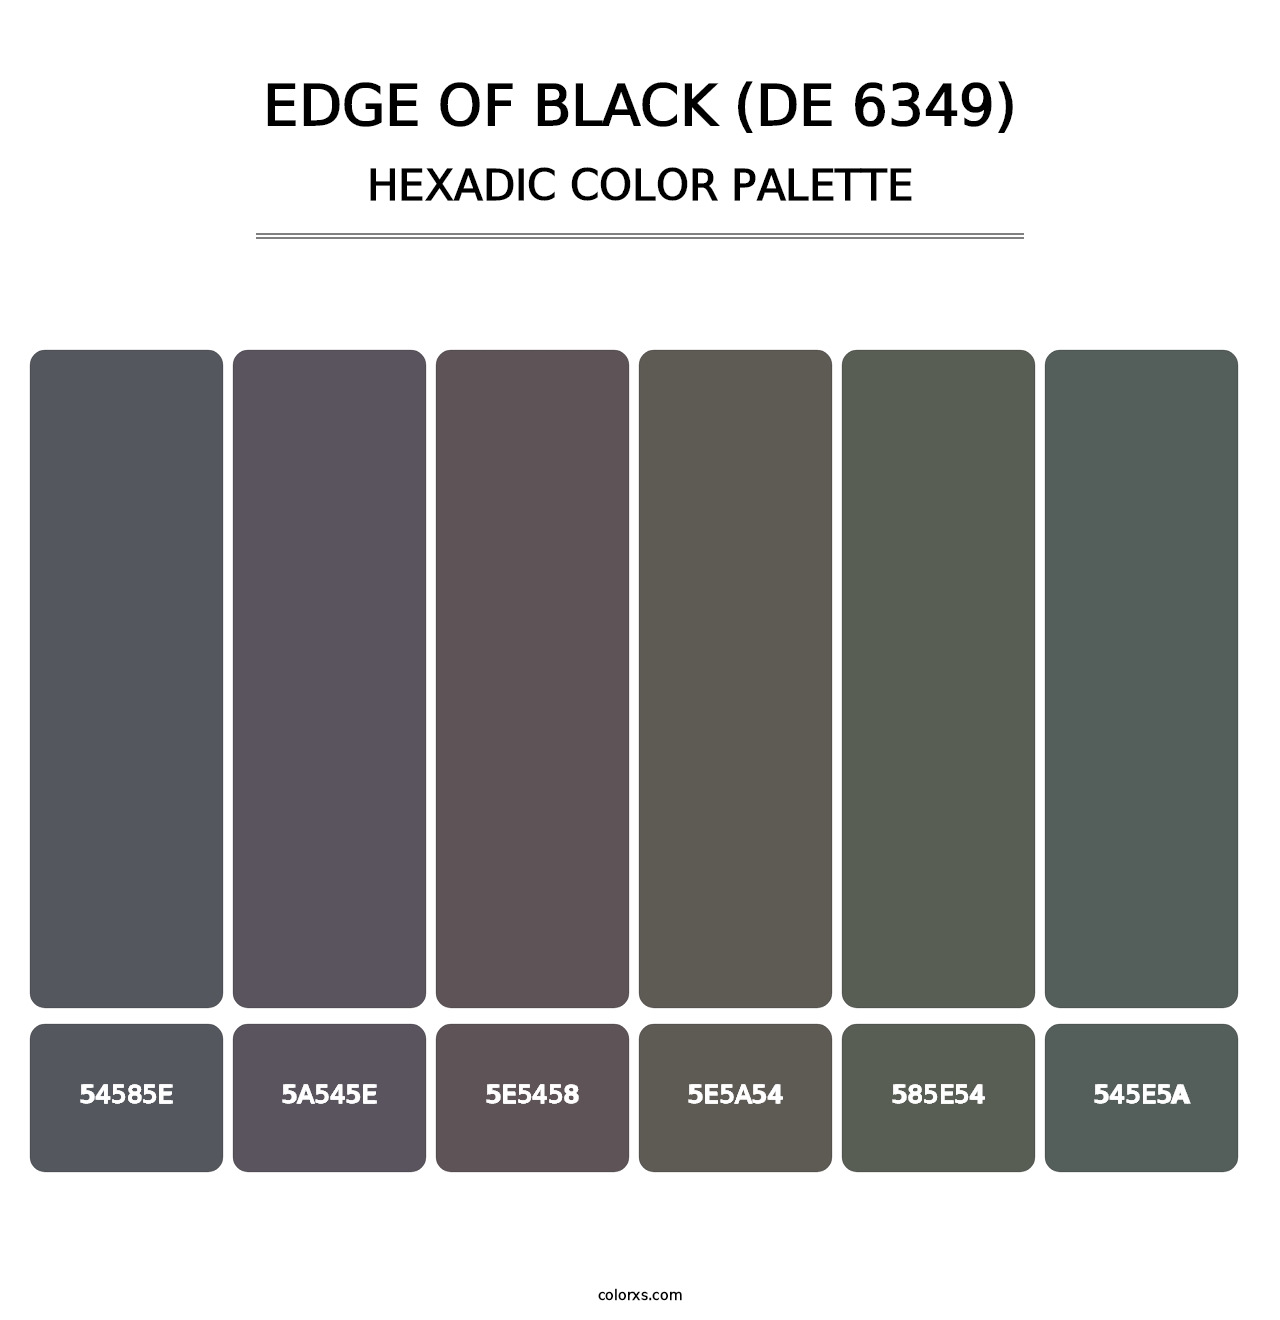 Edge of Black (DE 6349) - Hexadic Color Palette